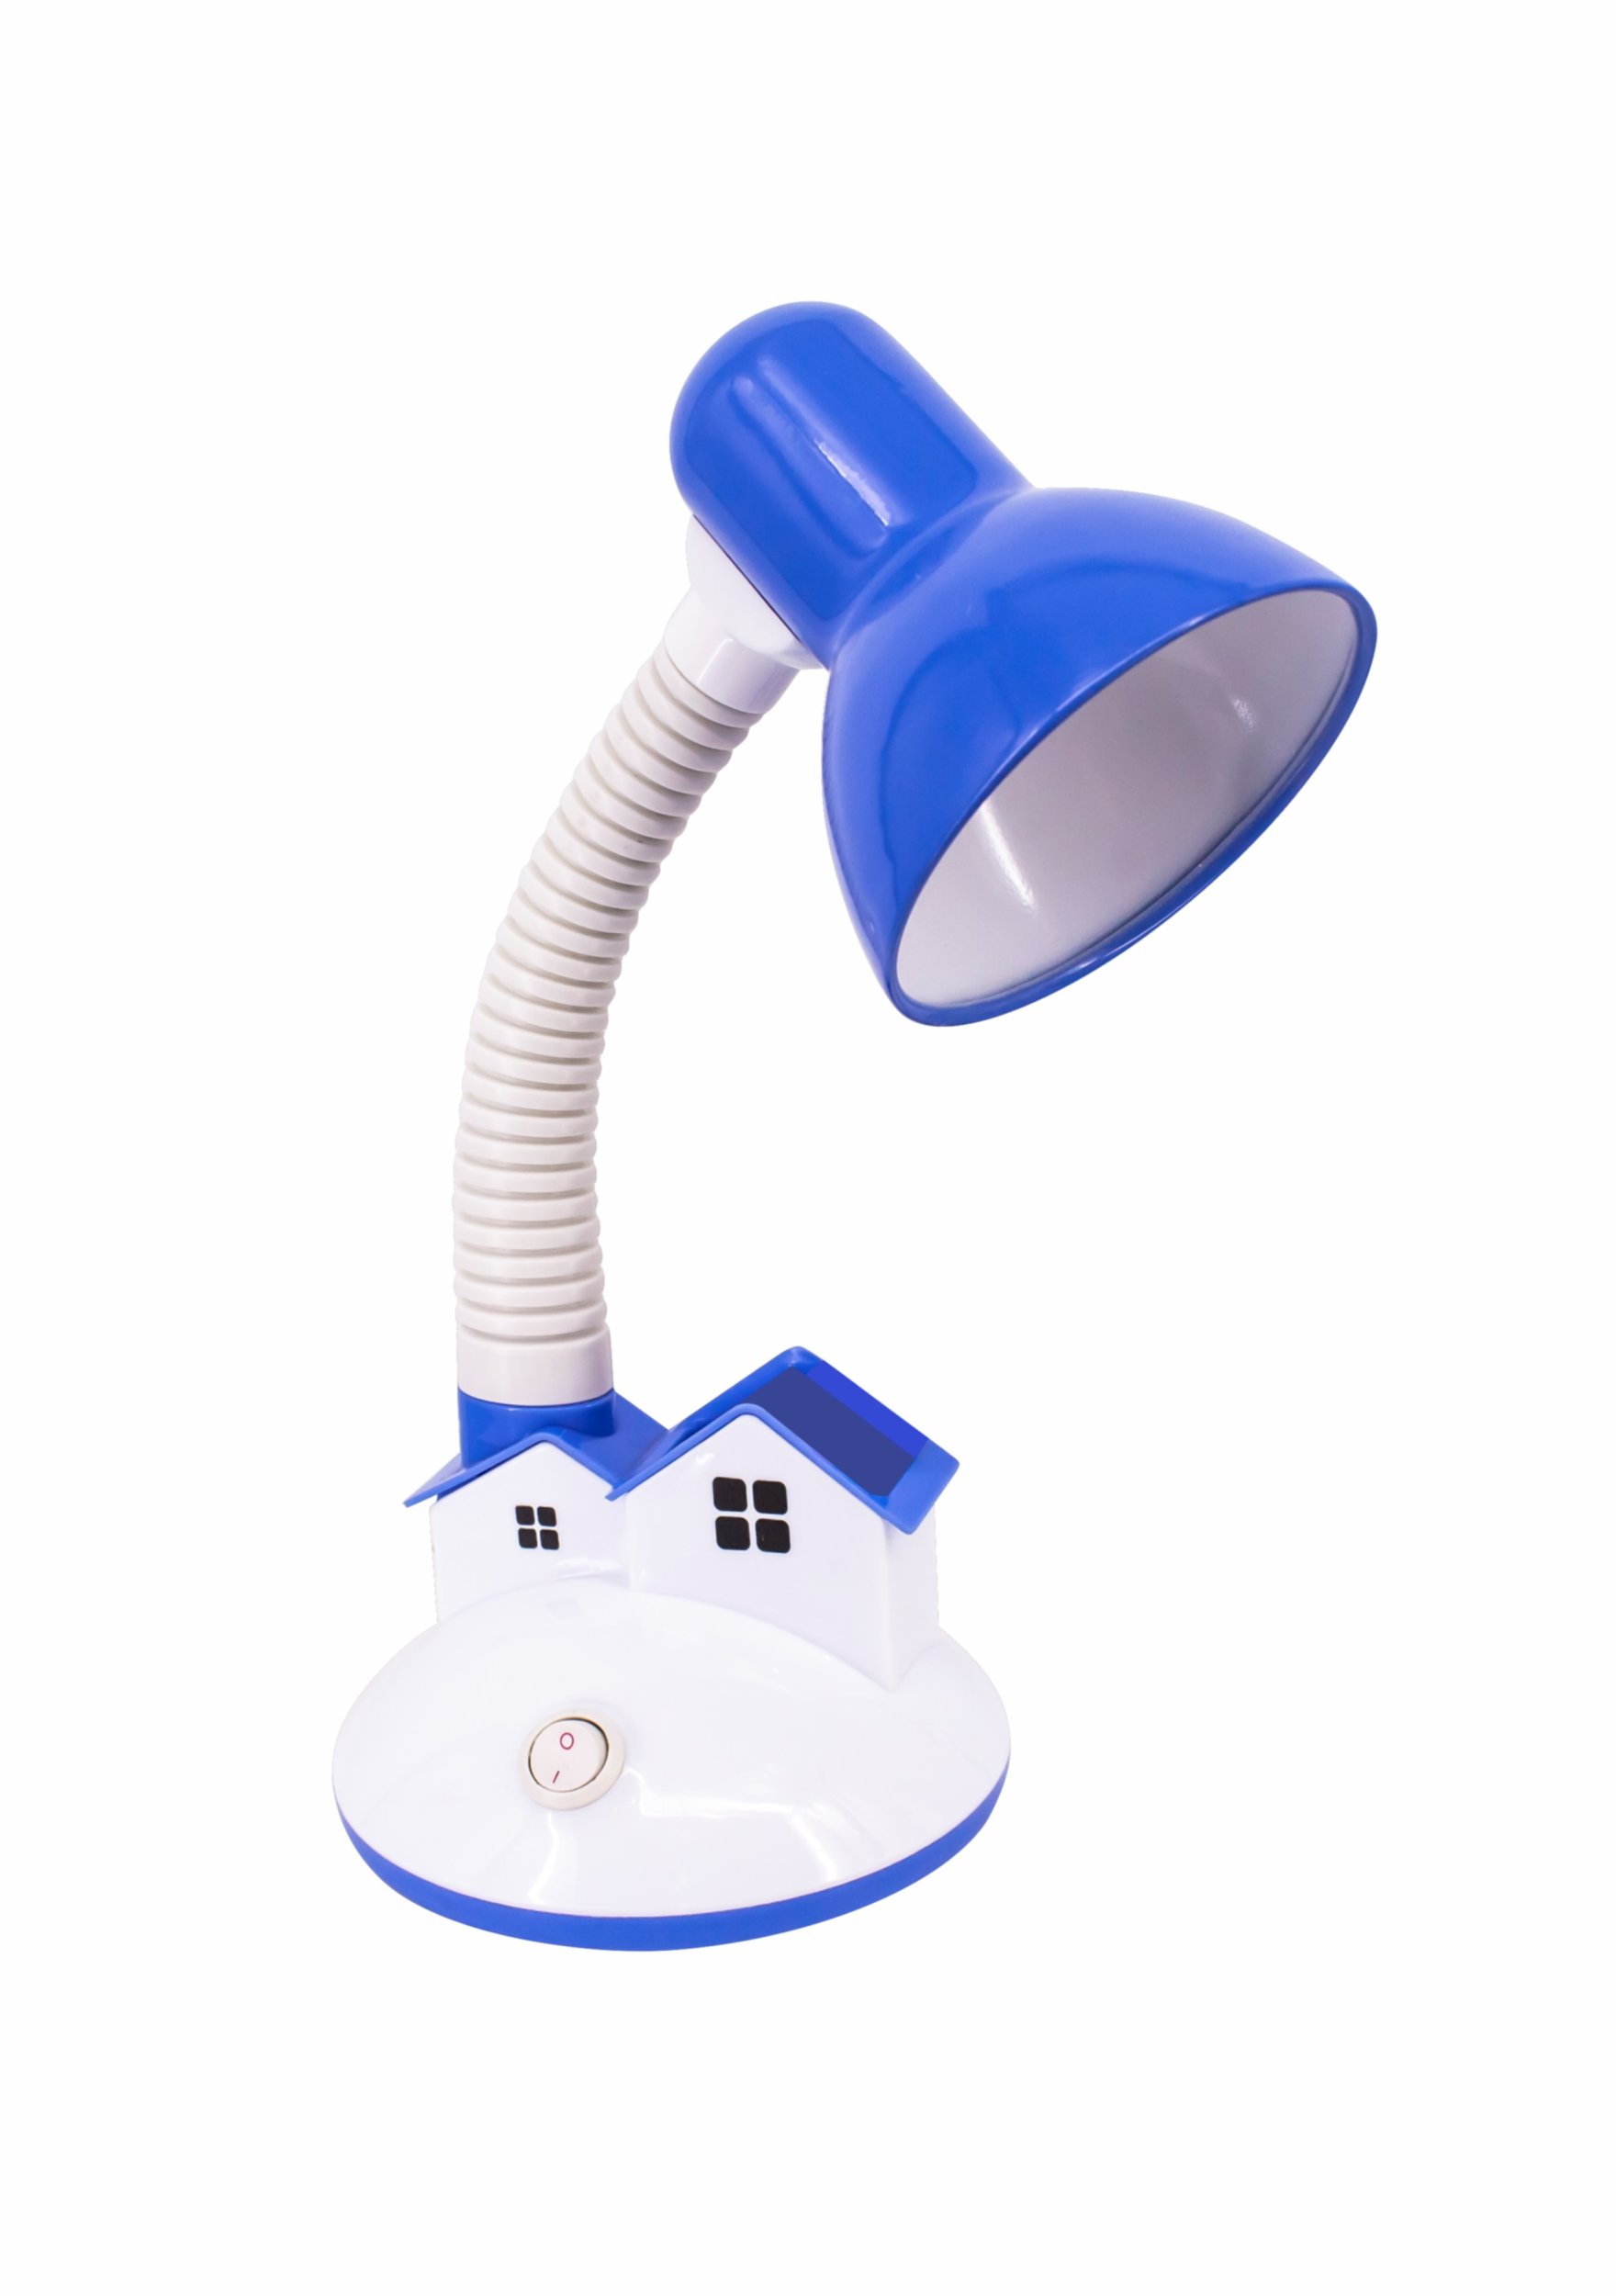 Детская настольная лампа Leek TL-110 LE061402-0048, цвет синий - фото 1